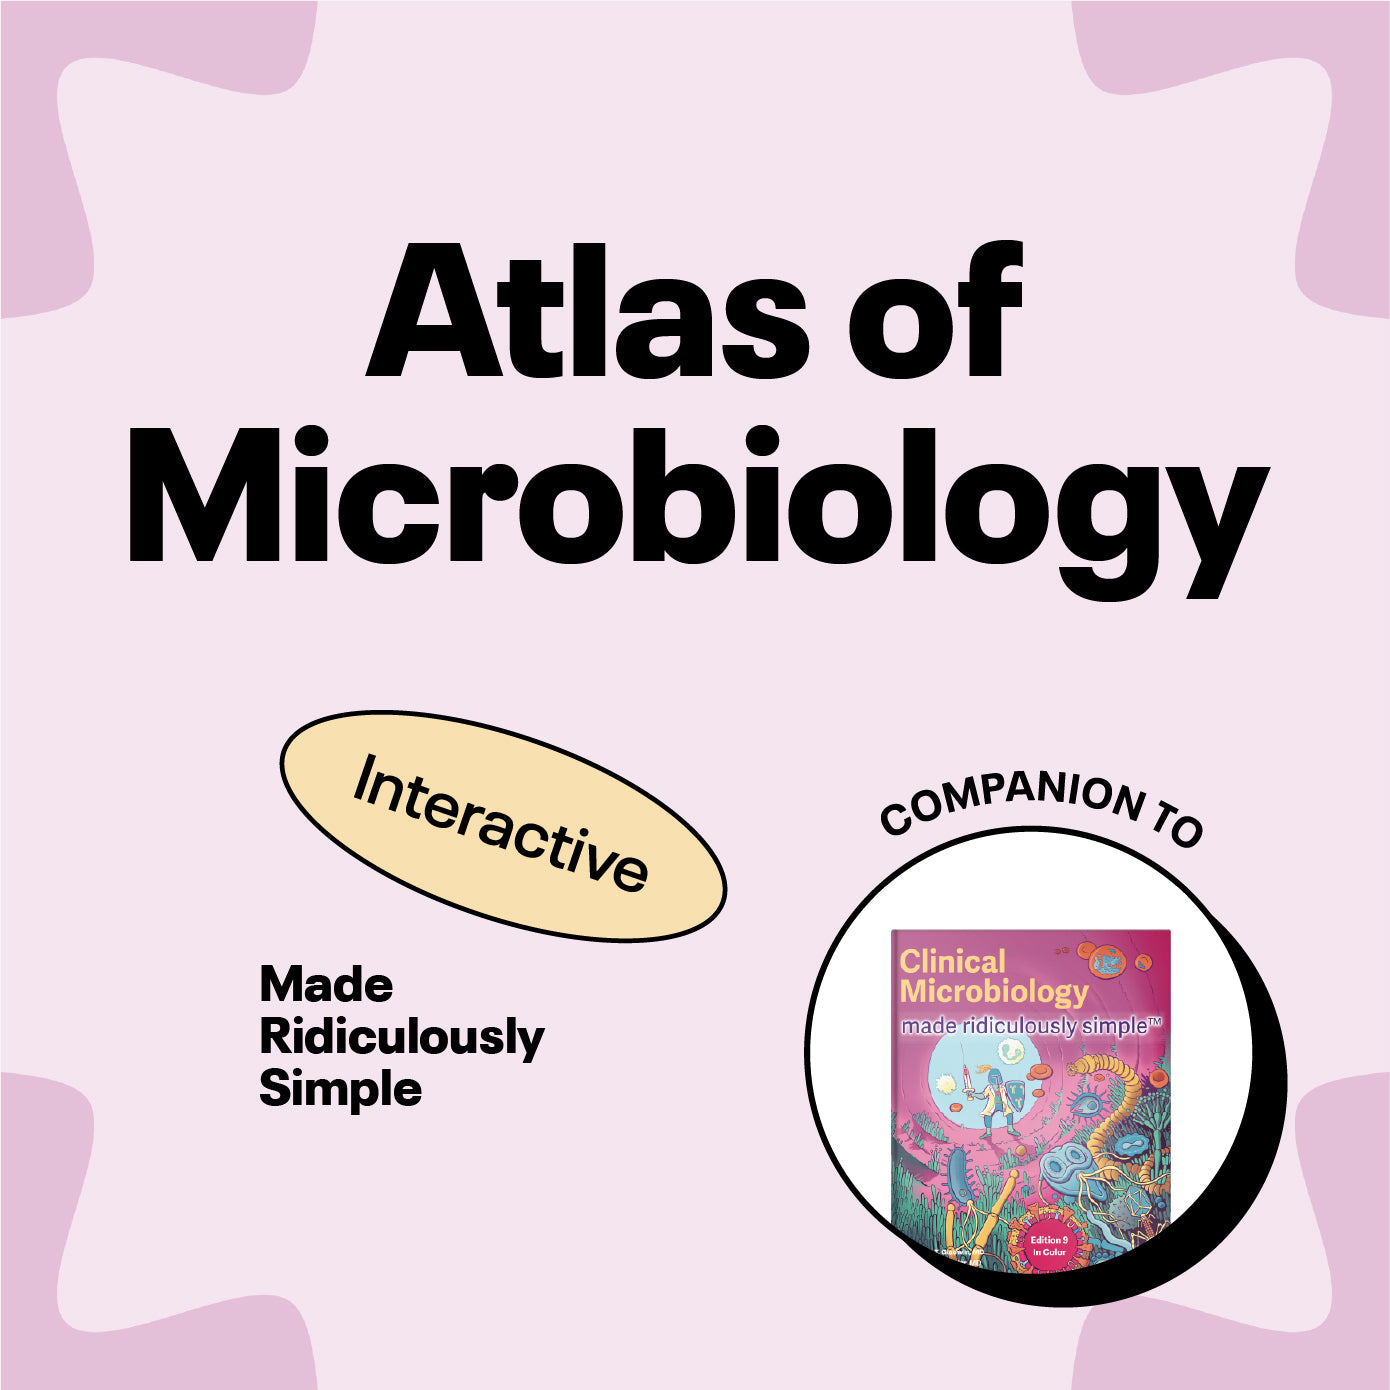 Atlas of Microbiology